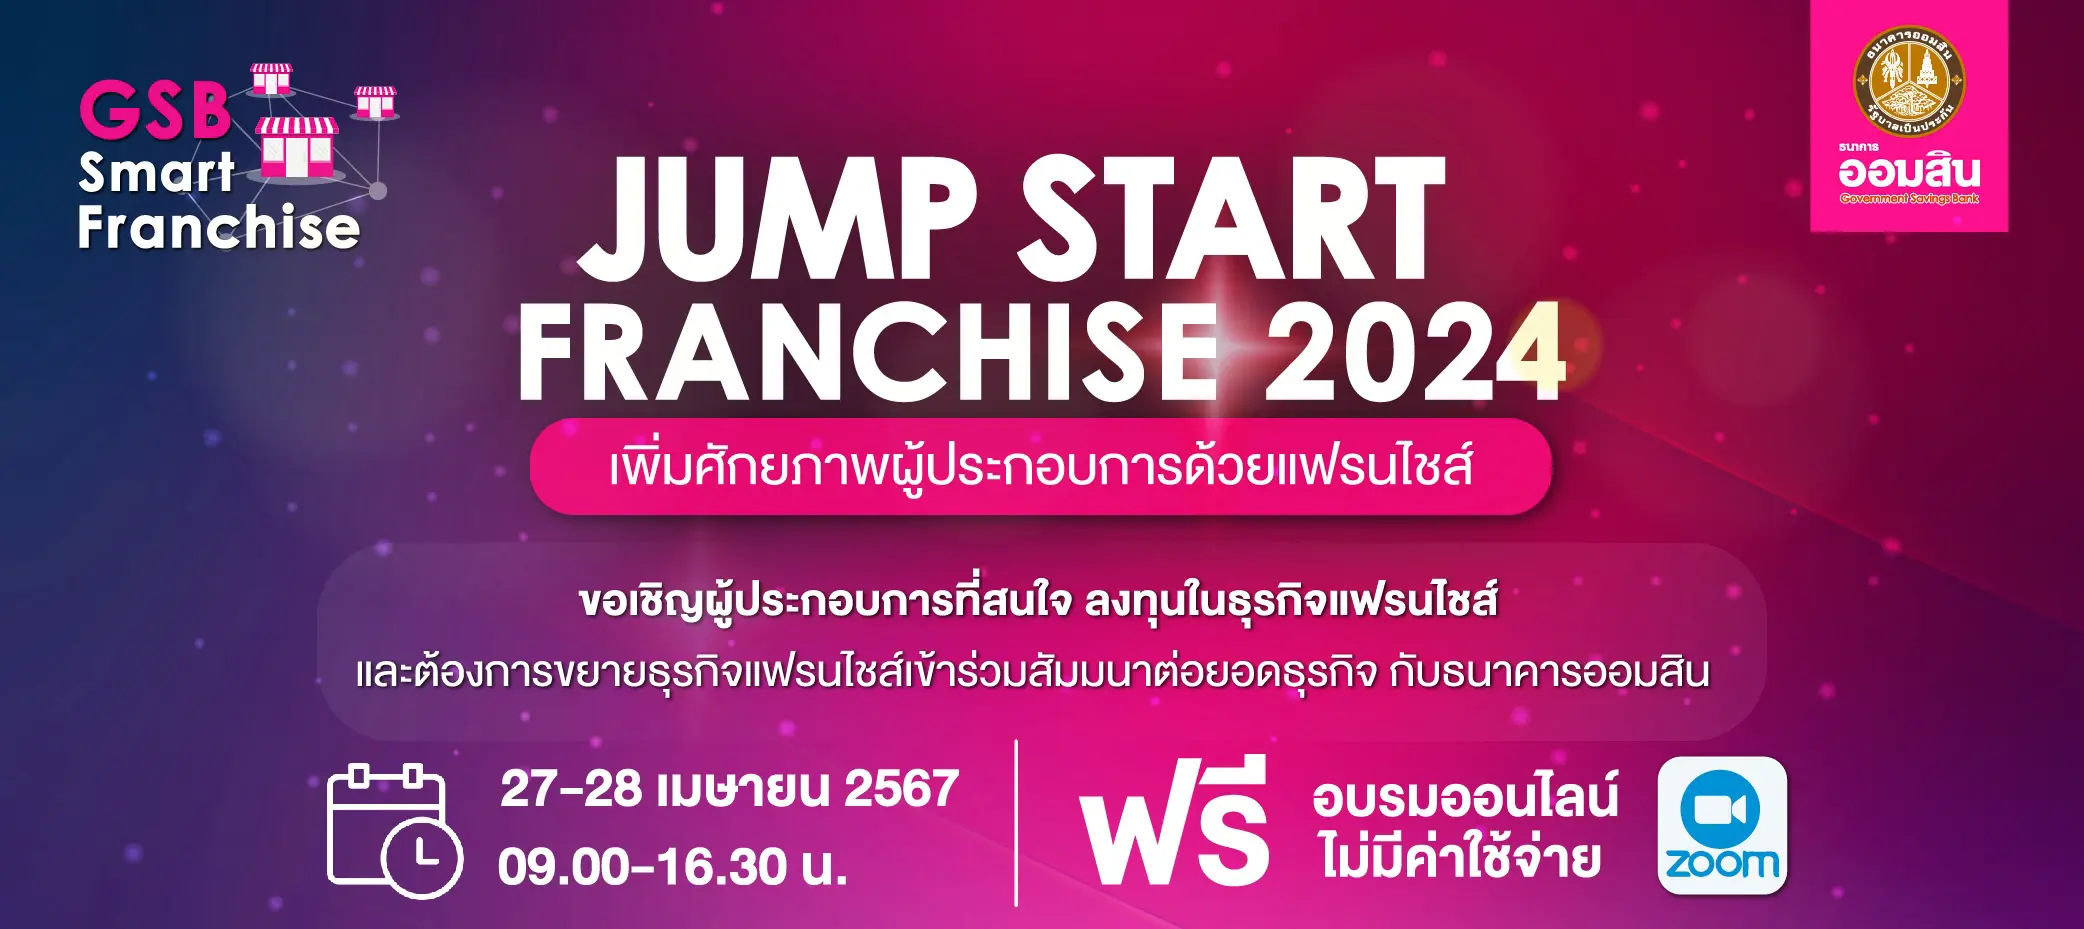 Jump Start Franchise by GSB เรียนฟรี 27-28 เมษายน 2567